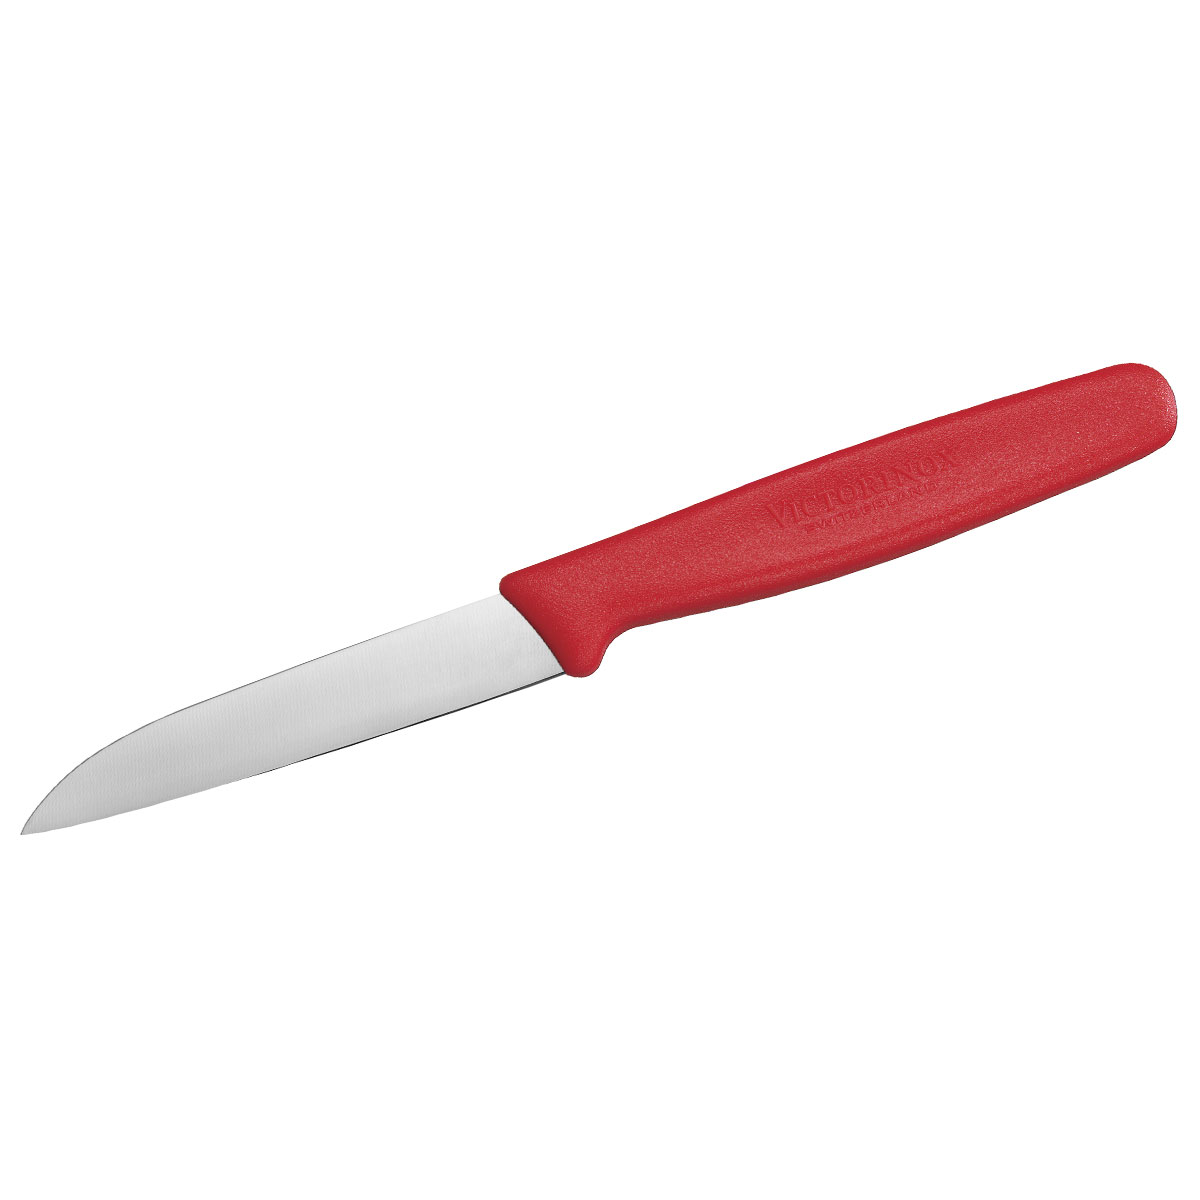 Victorinox Paring Knife, 8cm (3 1/4) - Straight, Plain Edge - Red